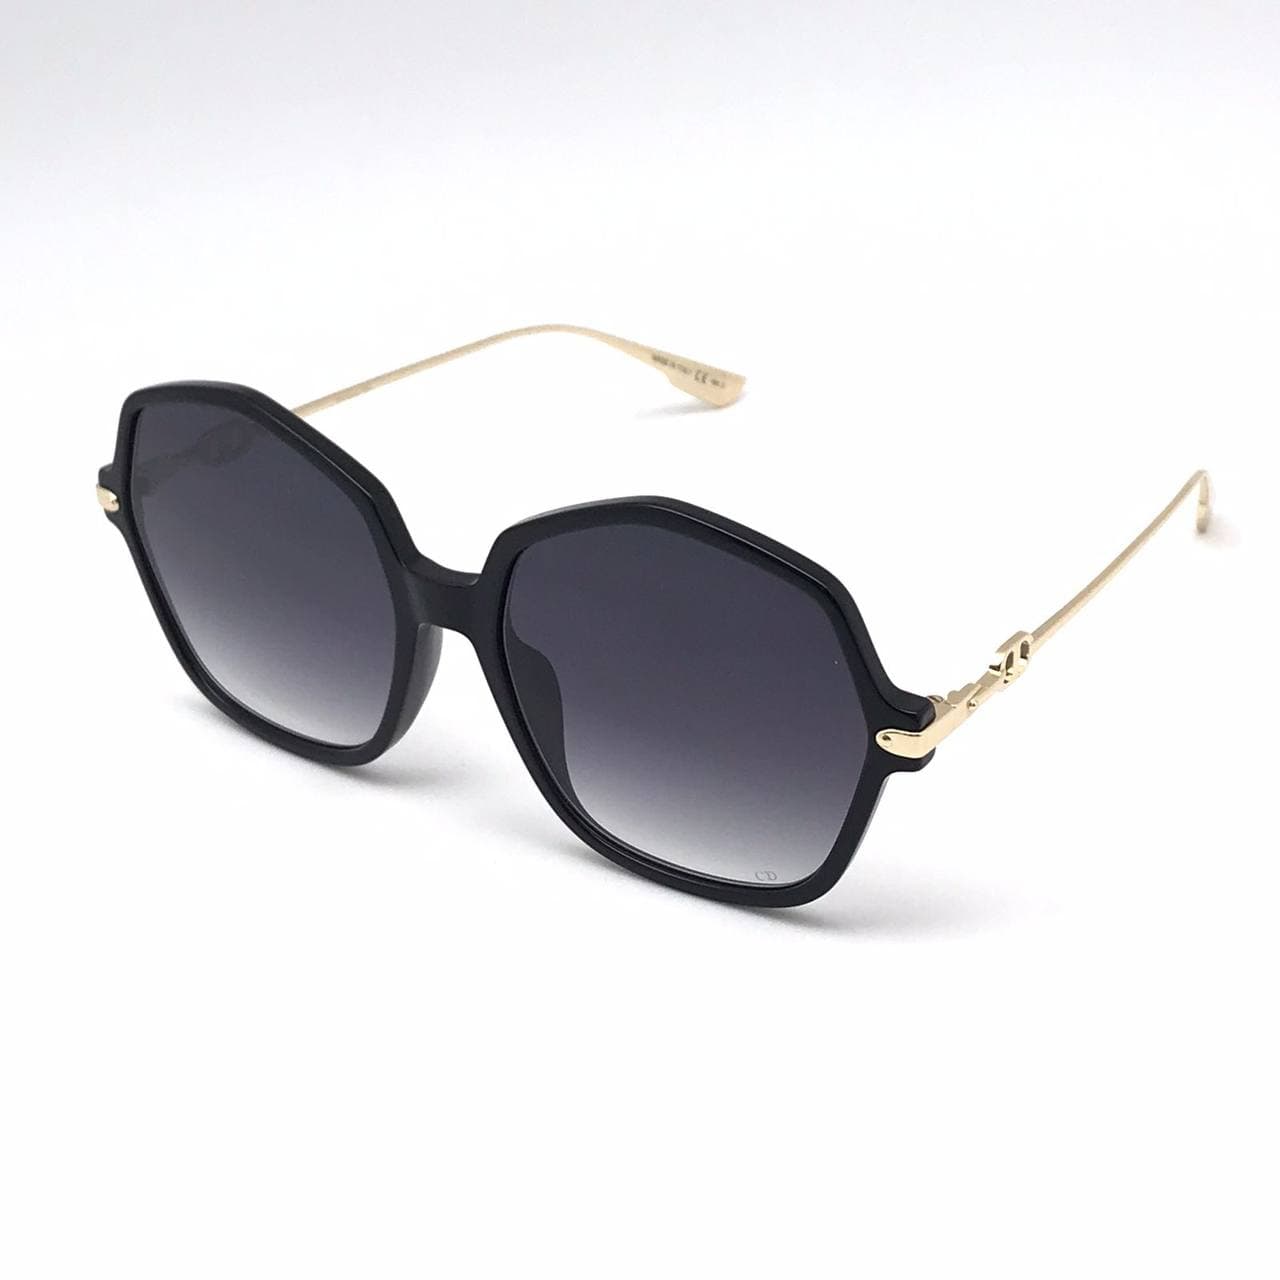 Christian Dior очки солнцезащитные. Очки диор. Очки Кристиан диор 1971 56-139 c1 цена. Очки кристиан диор